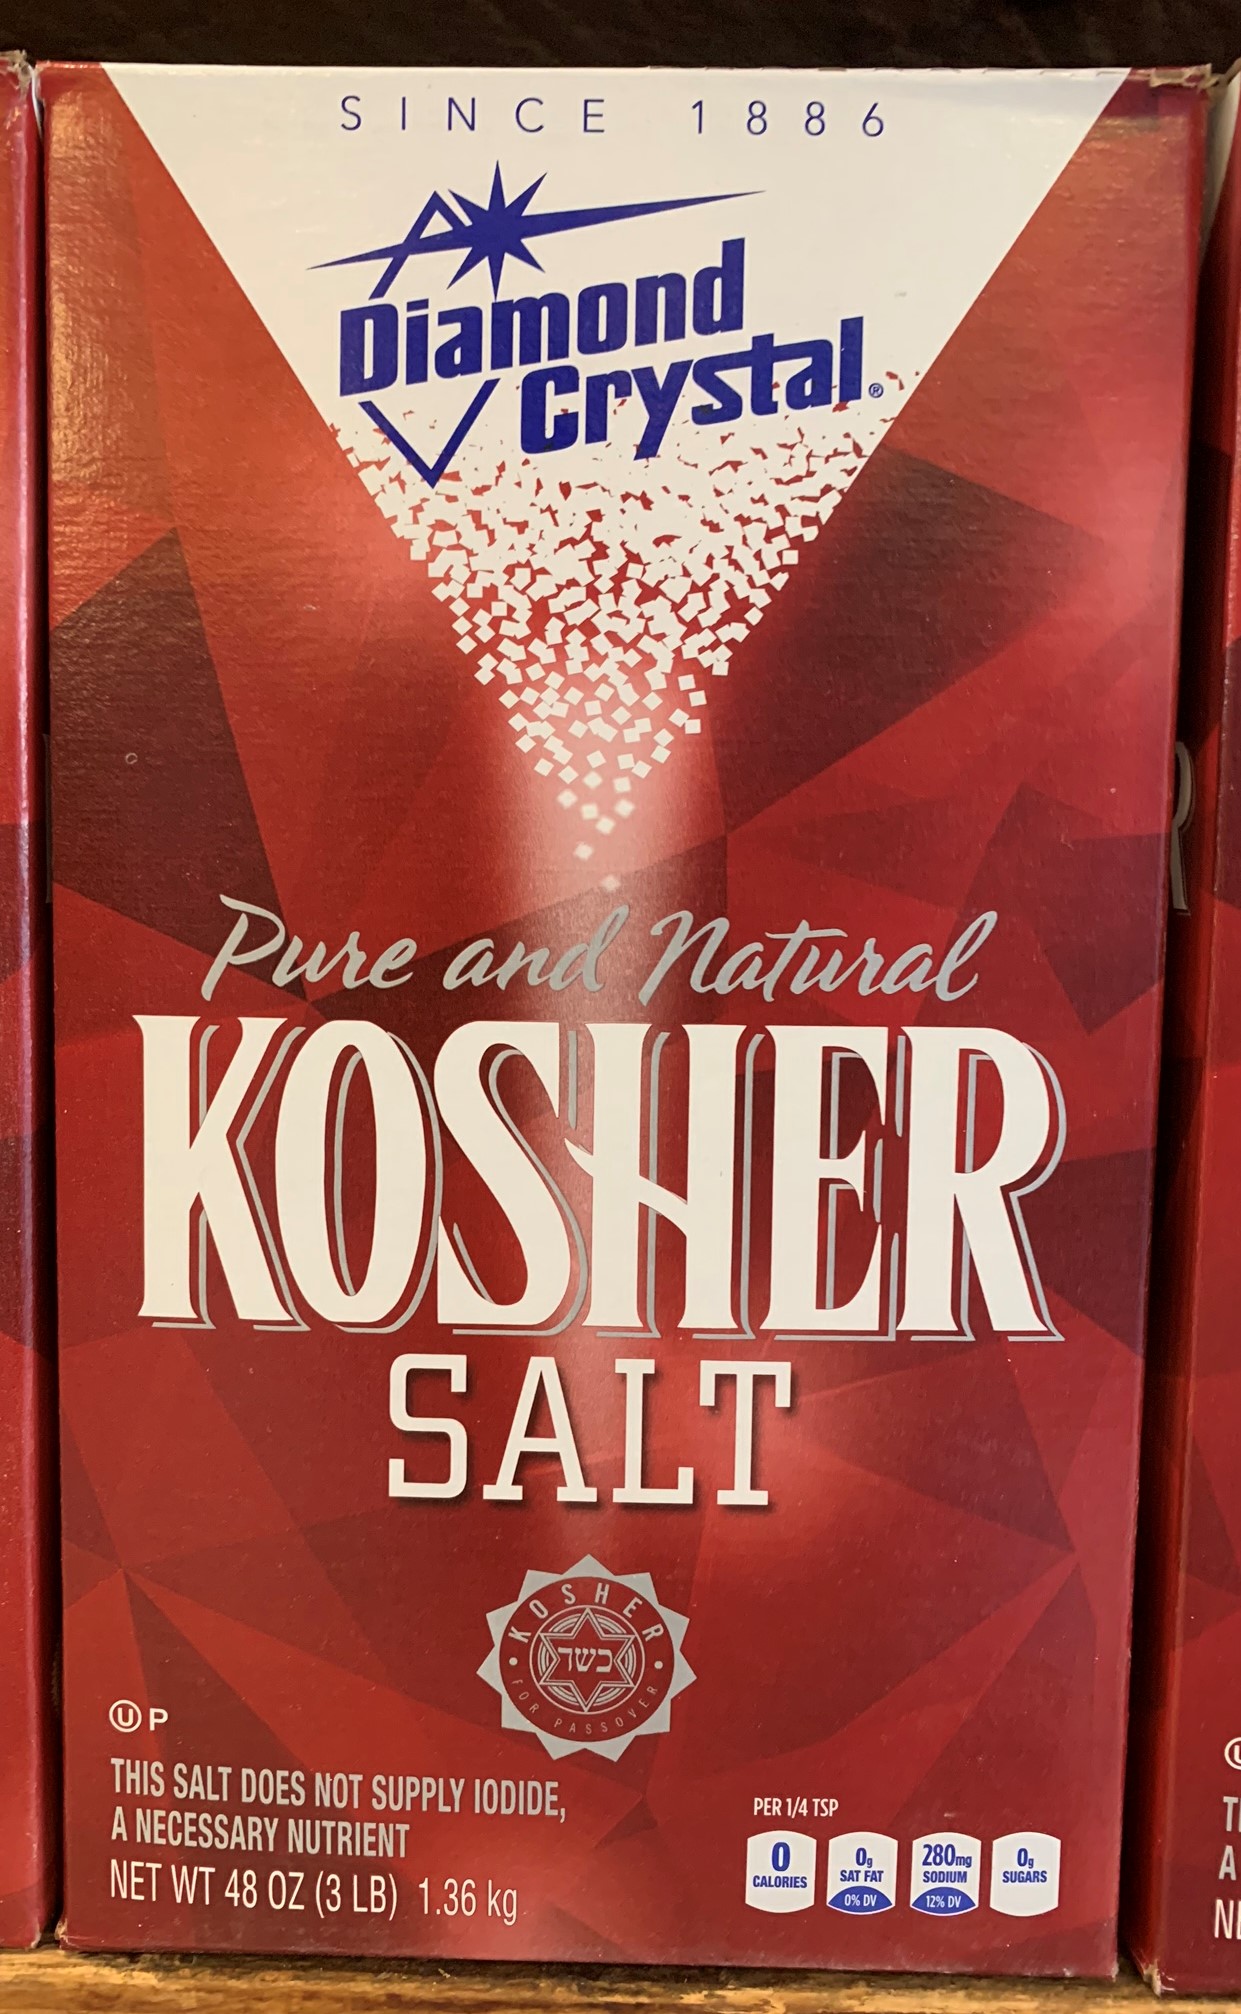 Diamond Crystal Kosher Salt, 3 Pound 